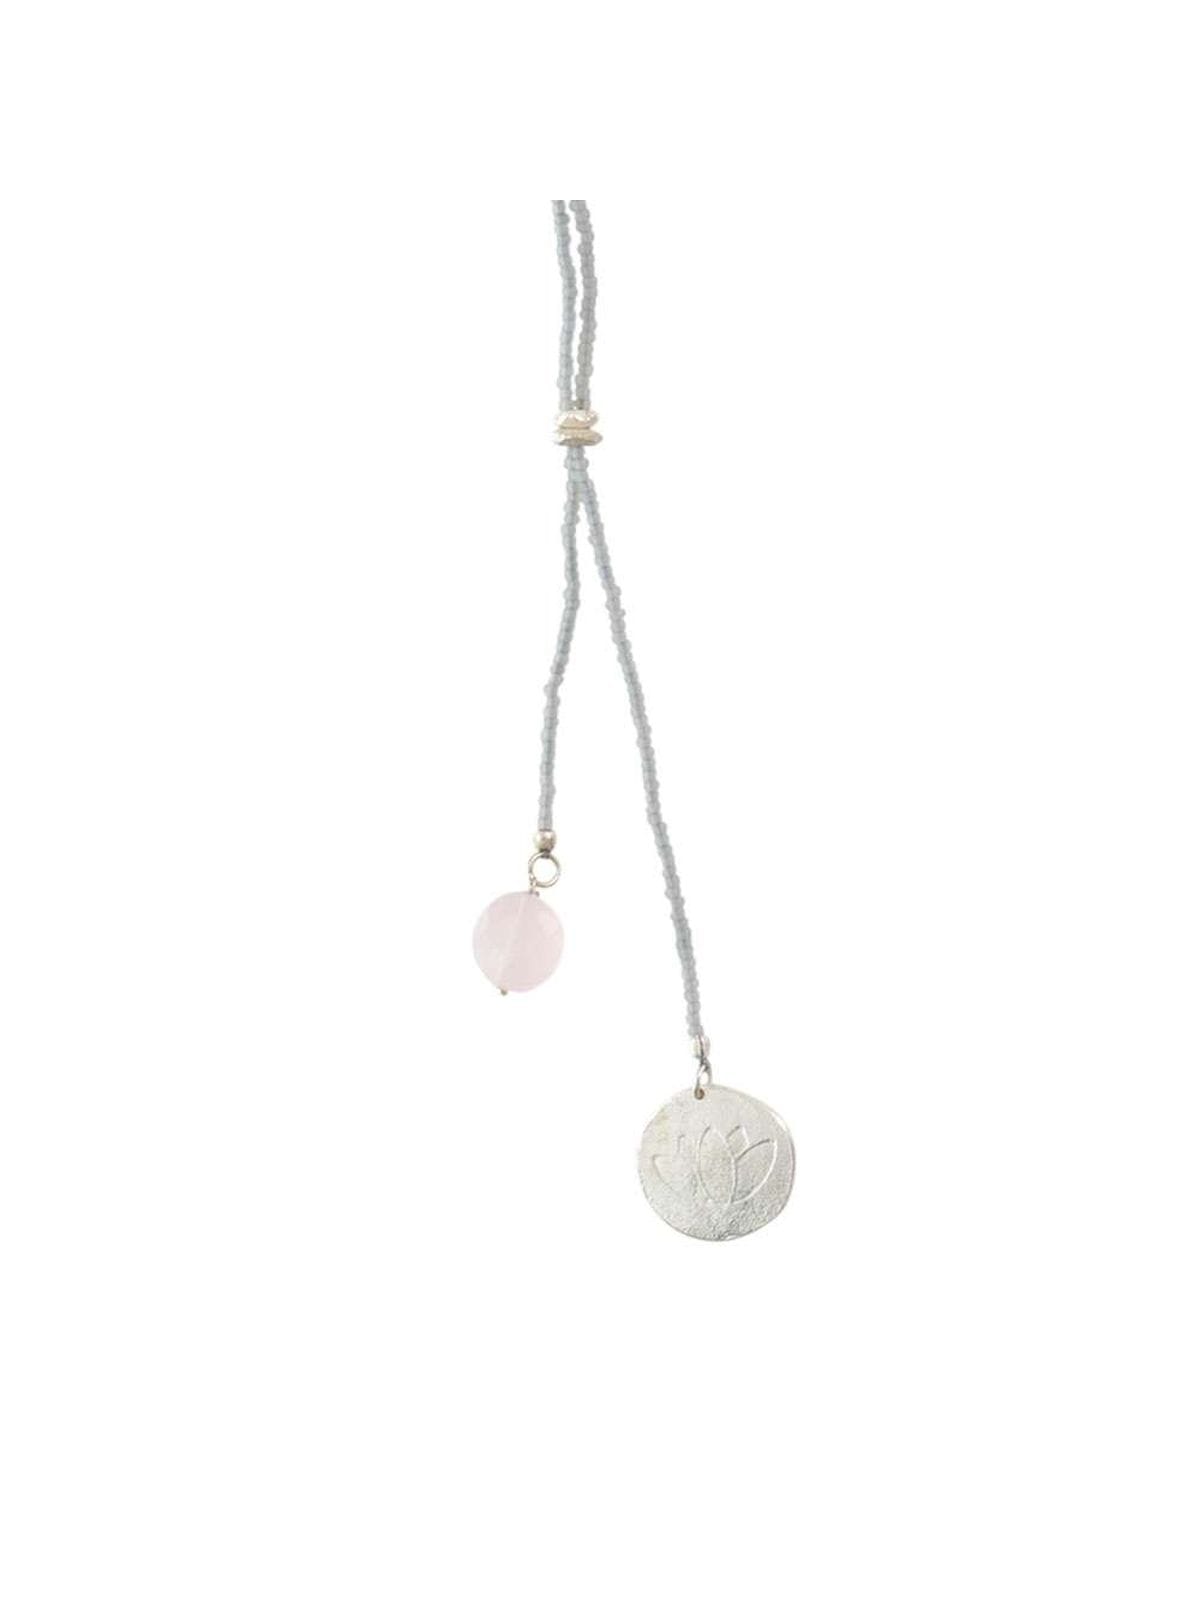 bl22258-fairy-rose-quartz-lotus-coin-silver-necklace_600x600@2x_1200x1600